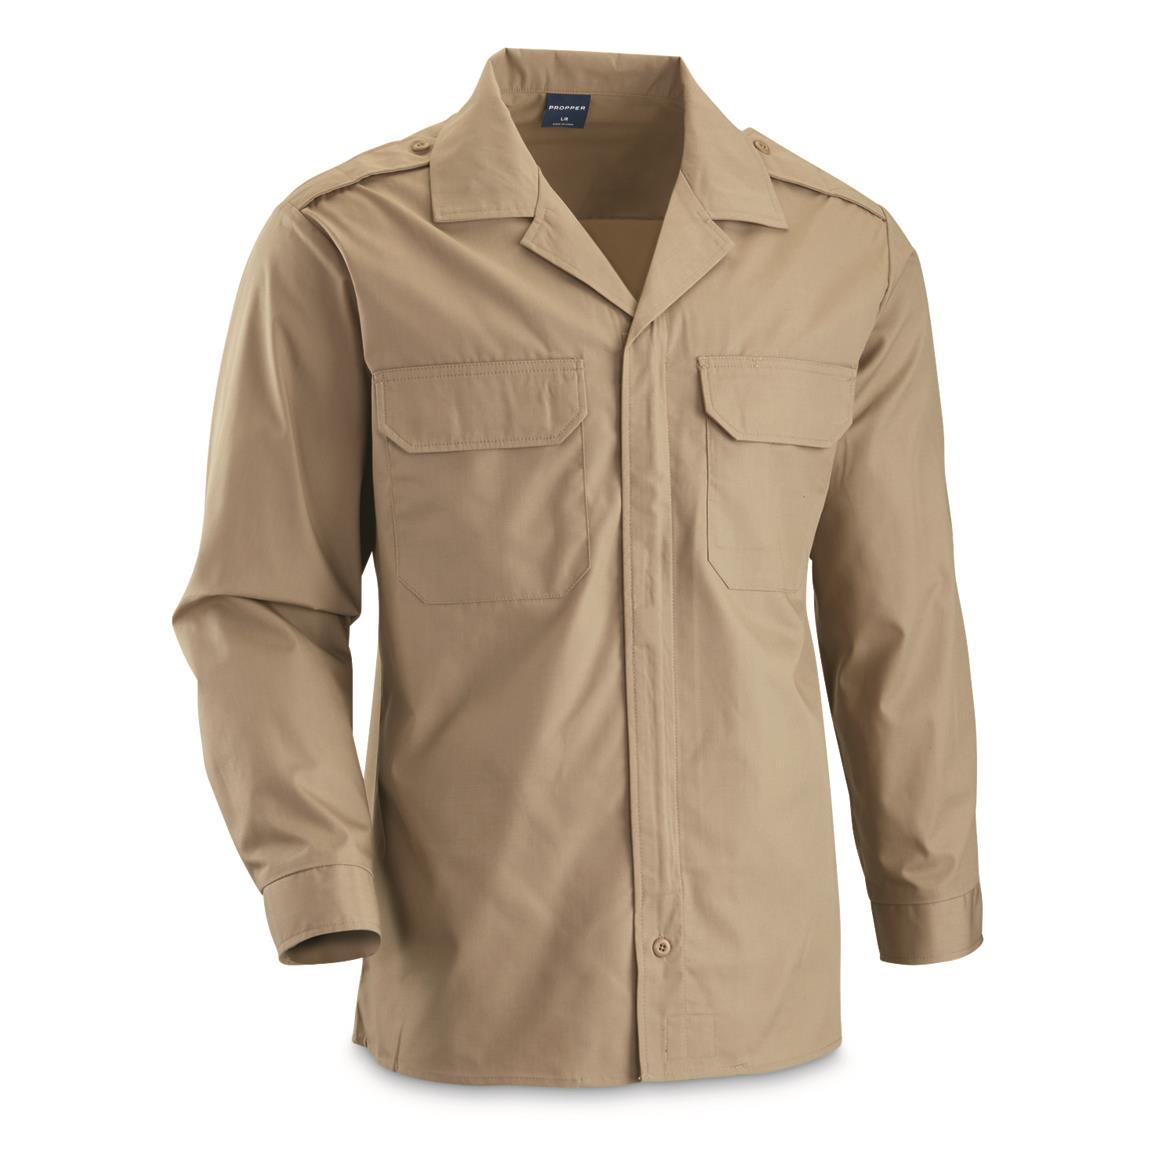 Propper Men's CDCR Line Duty Shirt, Long Sleeve, Tan